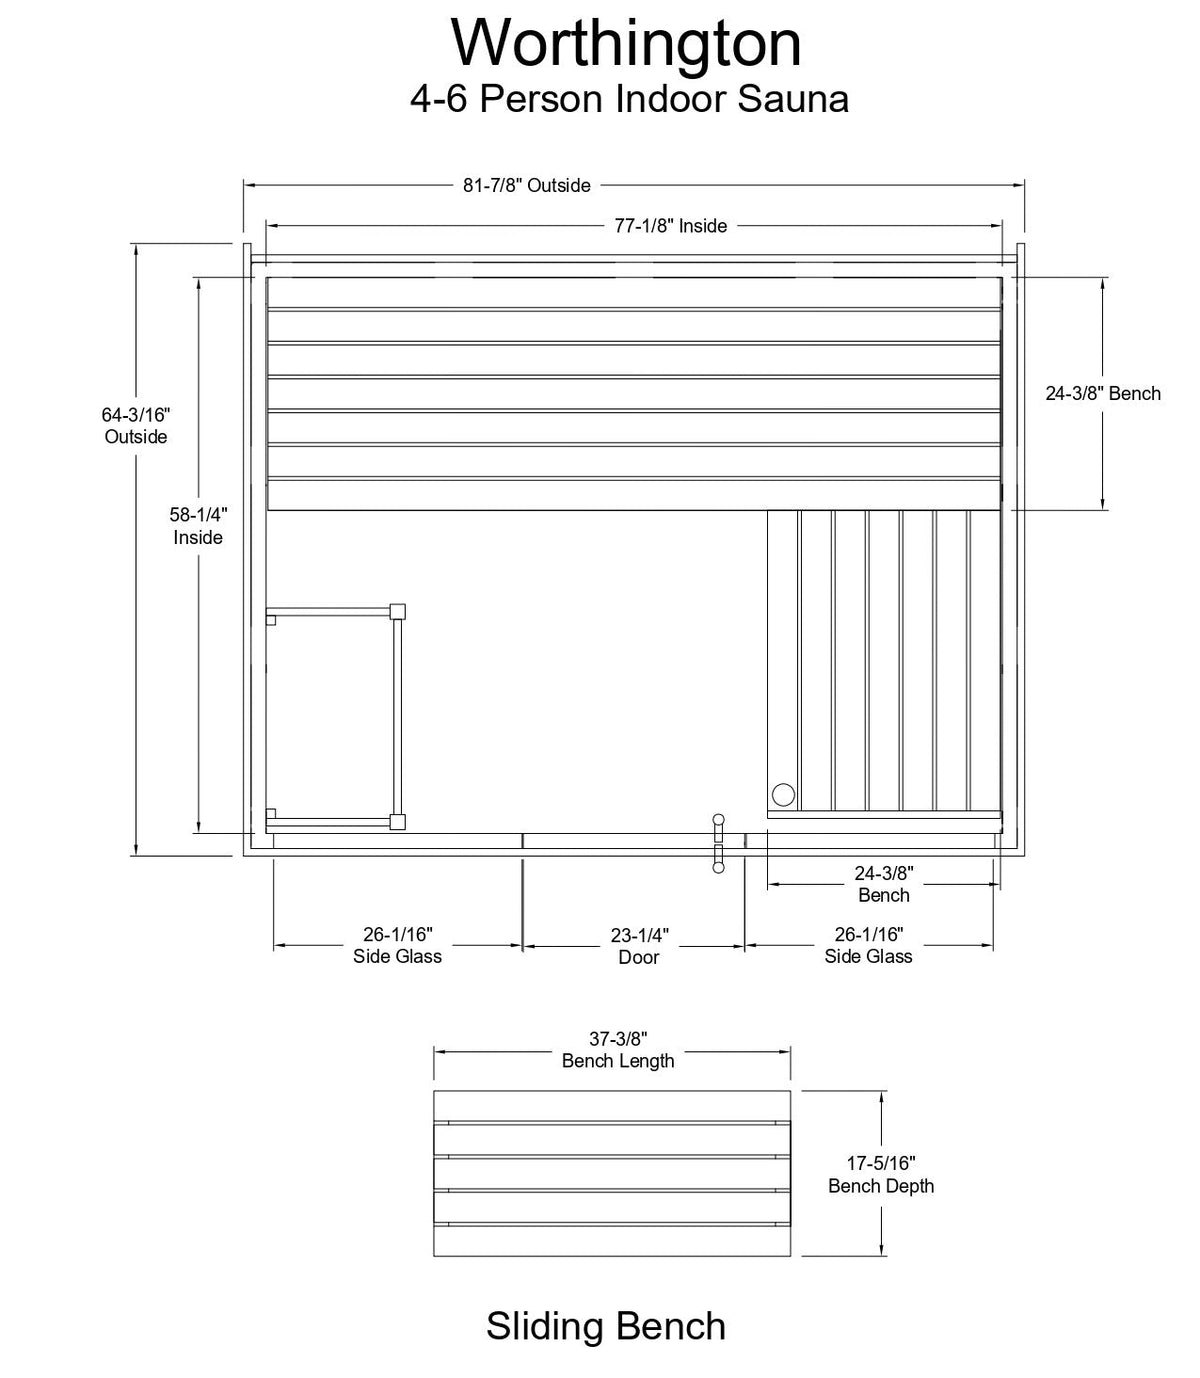 Almost Heaven Worthington 4-6 Person Indoor Sauna-Traditional Saunas-Nordica Sauna